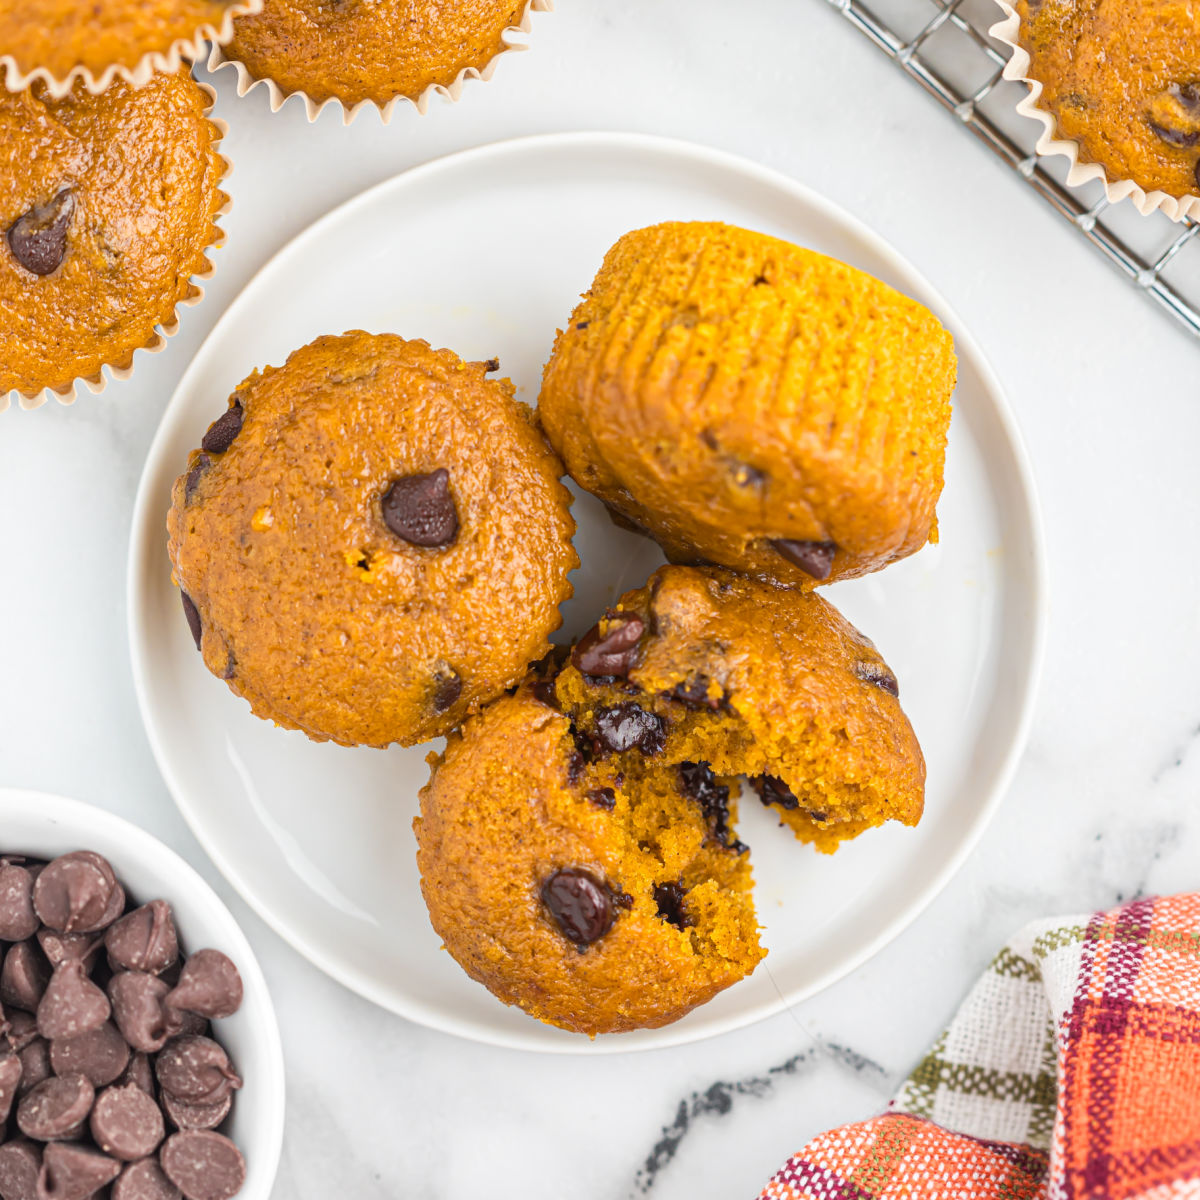 https://www.eatingonadime.com/wp-content/uploads/2020/11/Pumpkin-Chocolate-Chip-Muffins-Square-Pic.jpg